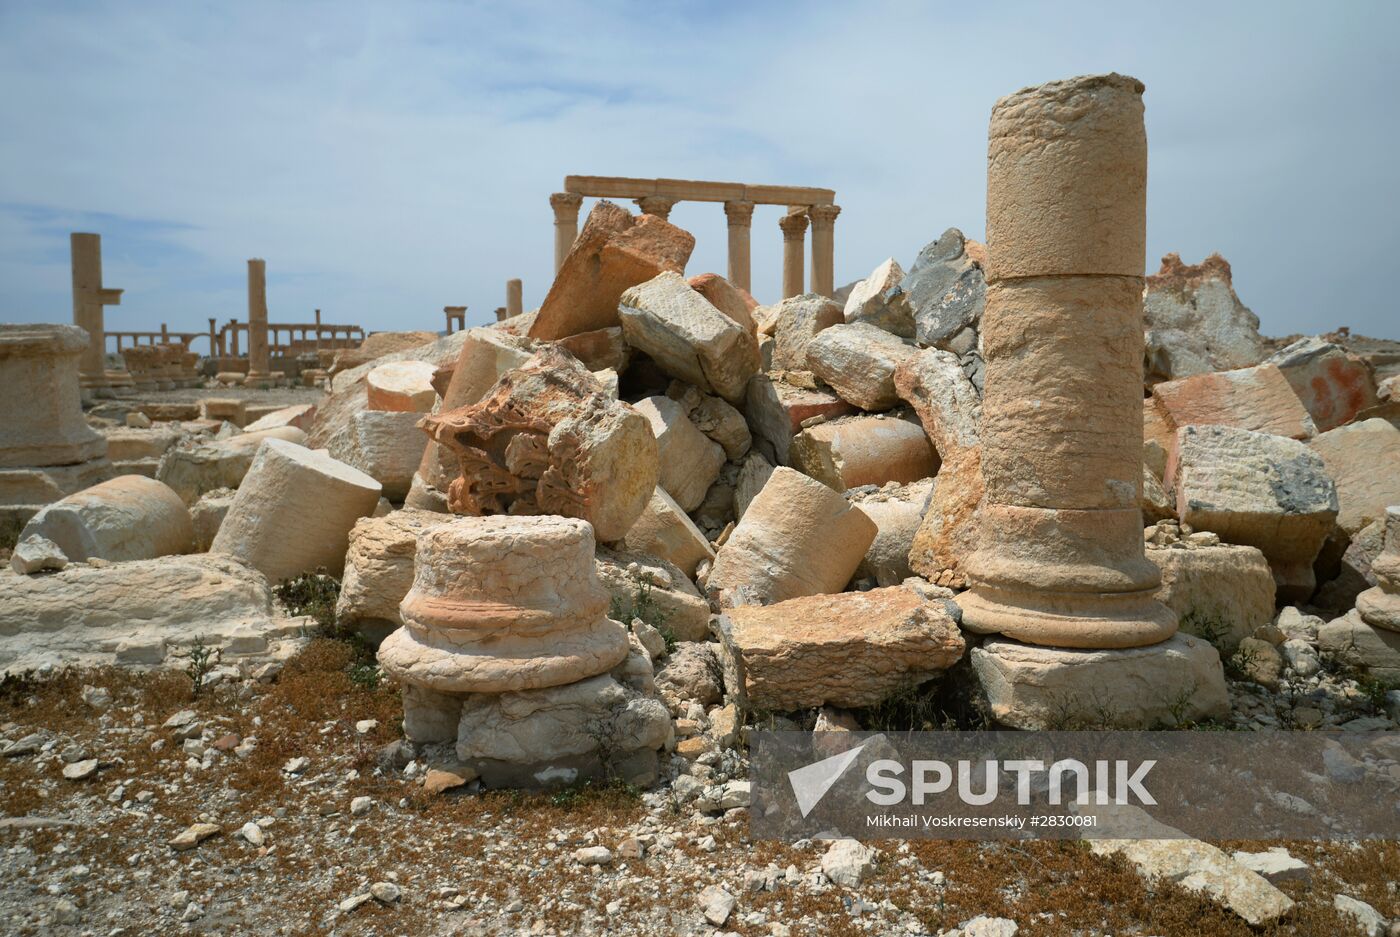 Palmyra's destroyed heritage